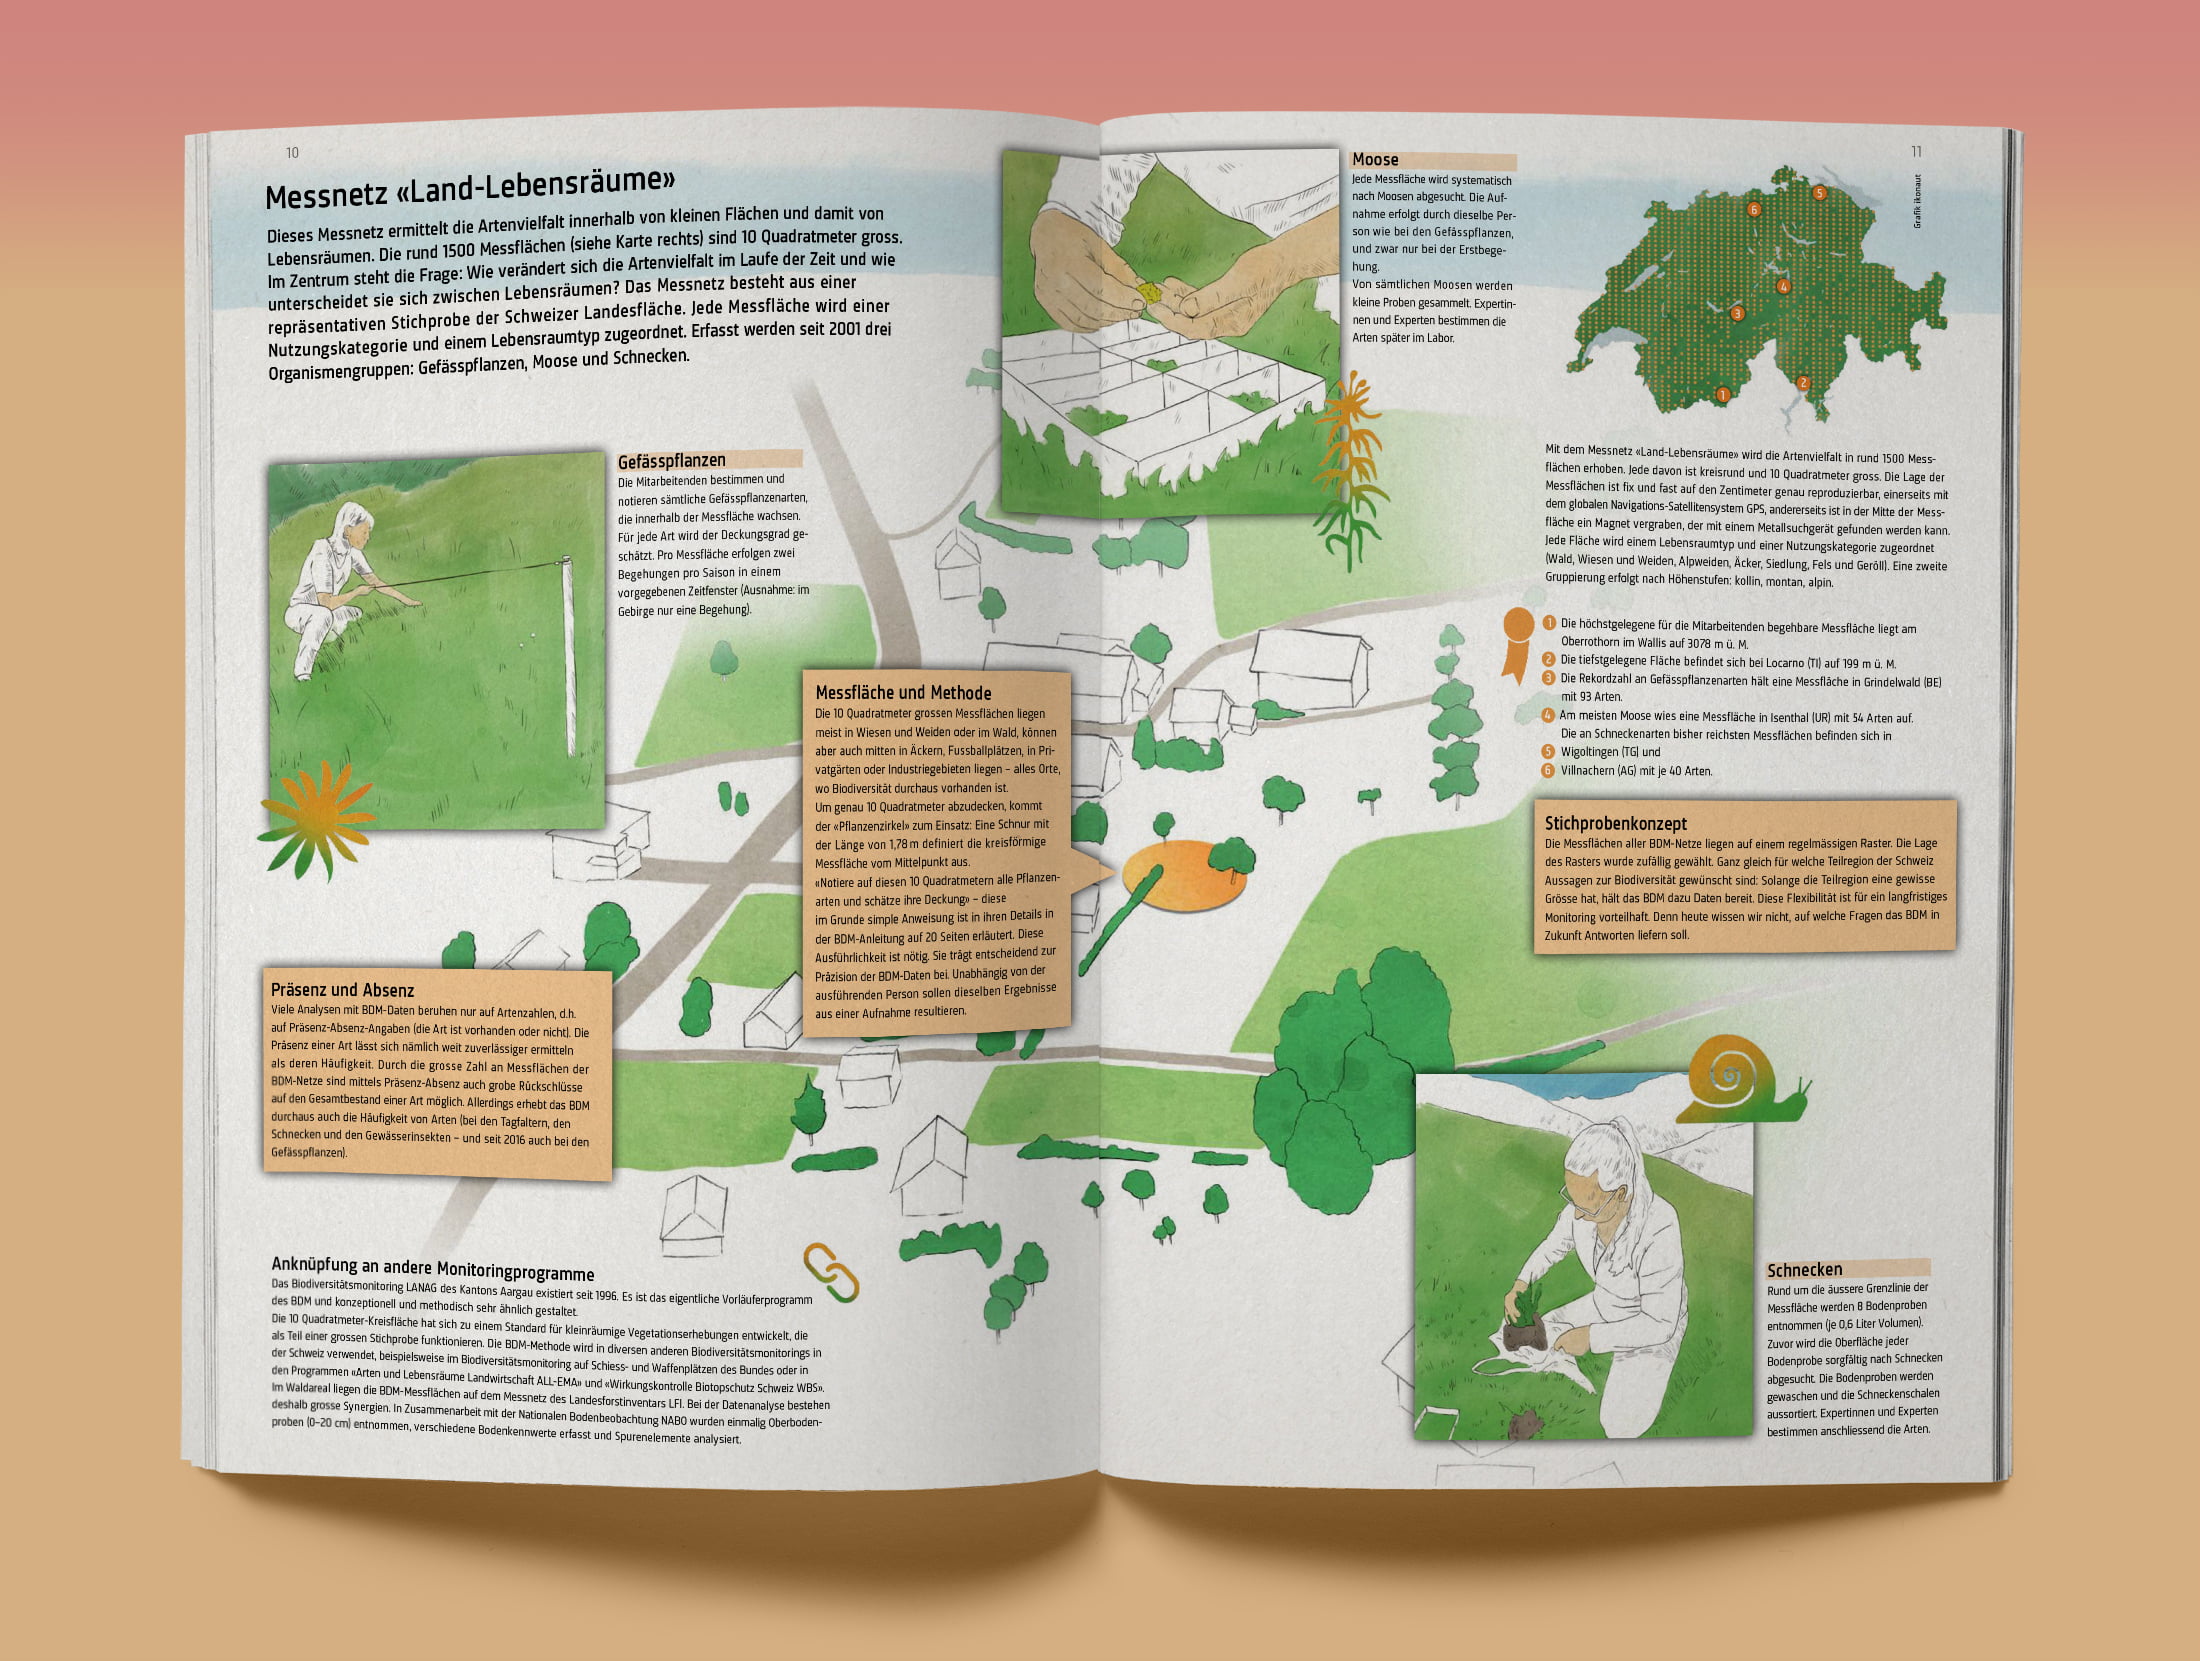 SCNAT, Biodiversitaetsmonitoring, Illustration, Messnetz Land-Lebensraeume, ikonaut